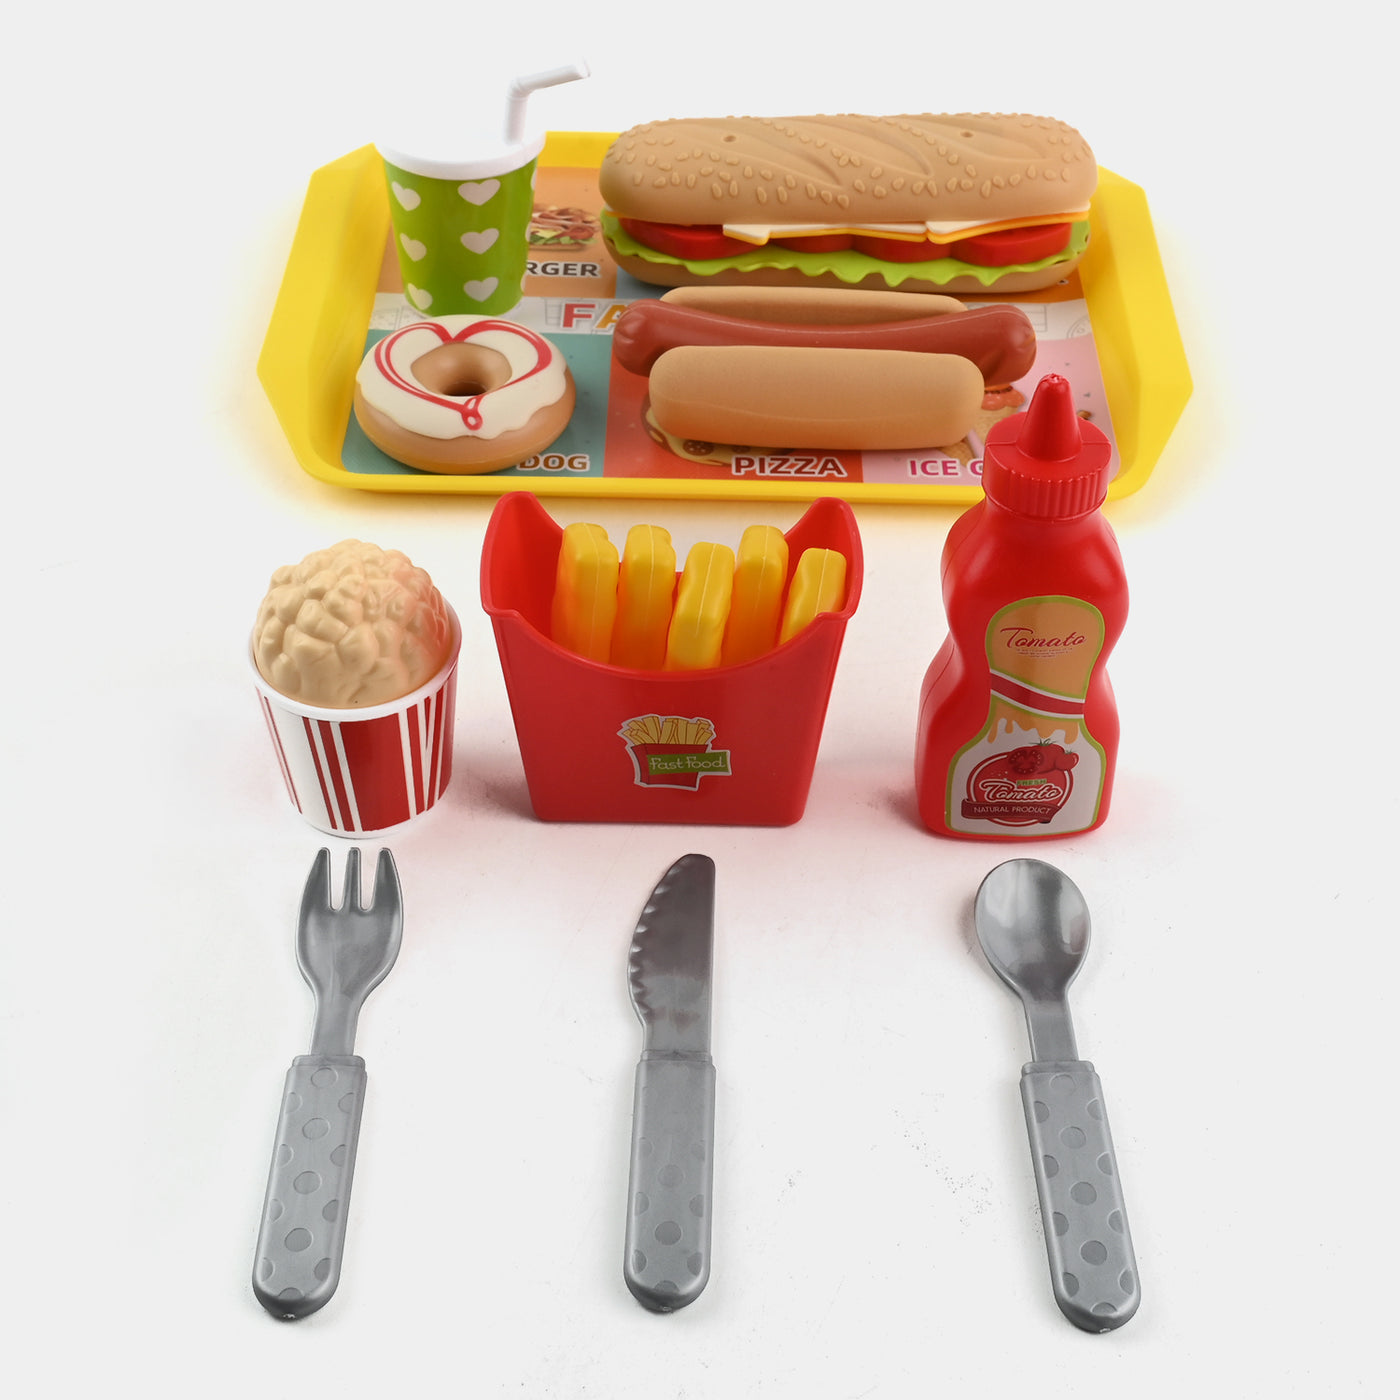 Burger Play Food Set Toy